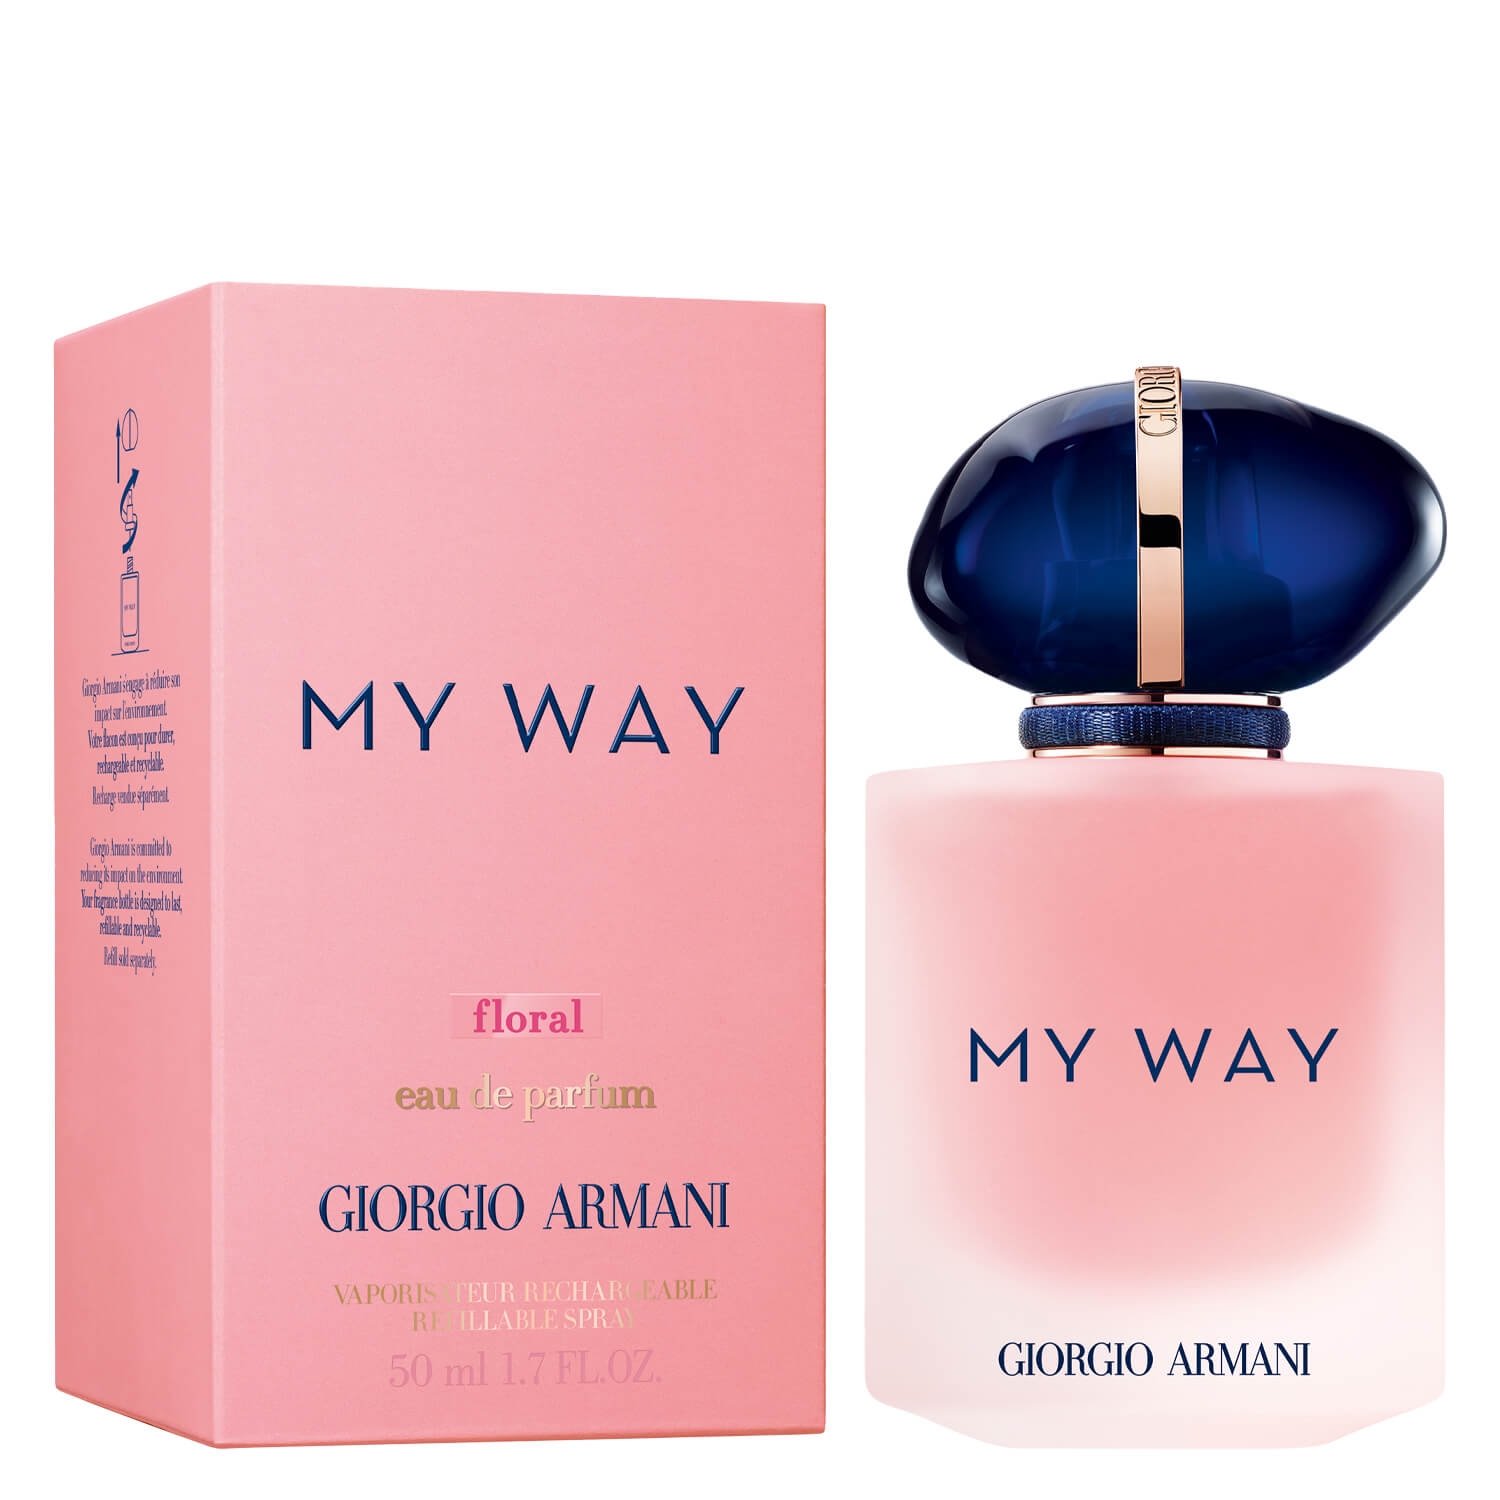 Produktbild von MY WAY - Floral Eau de Parfum